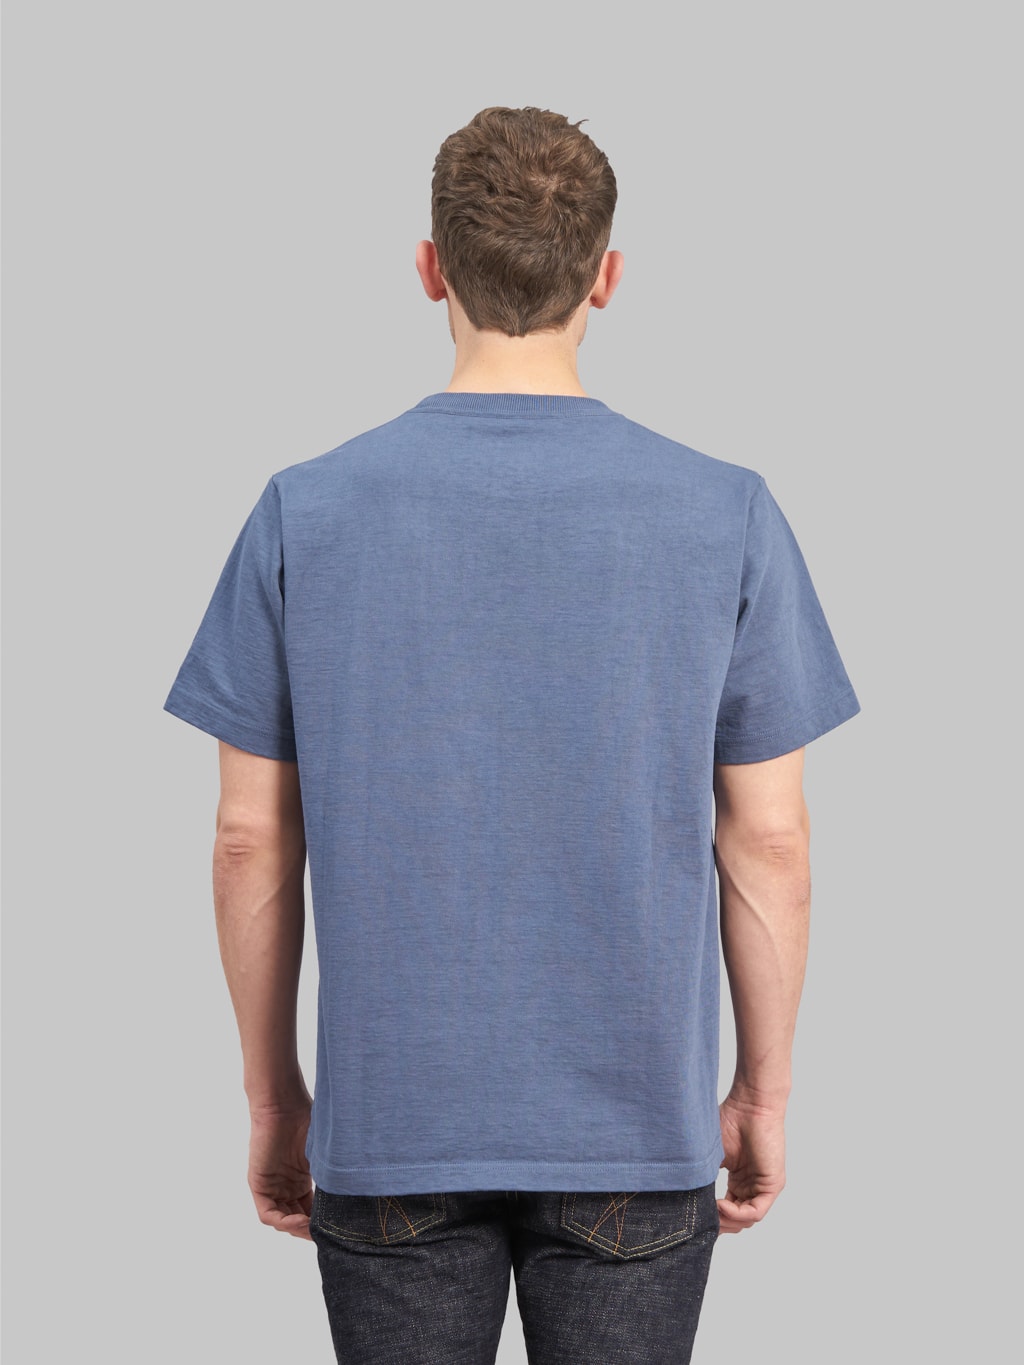 jackman dotsume tshirt off classic blue model back fit